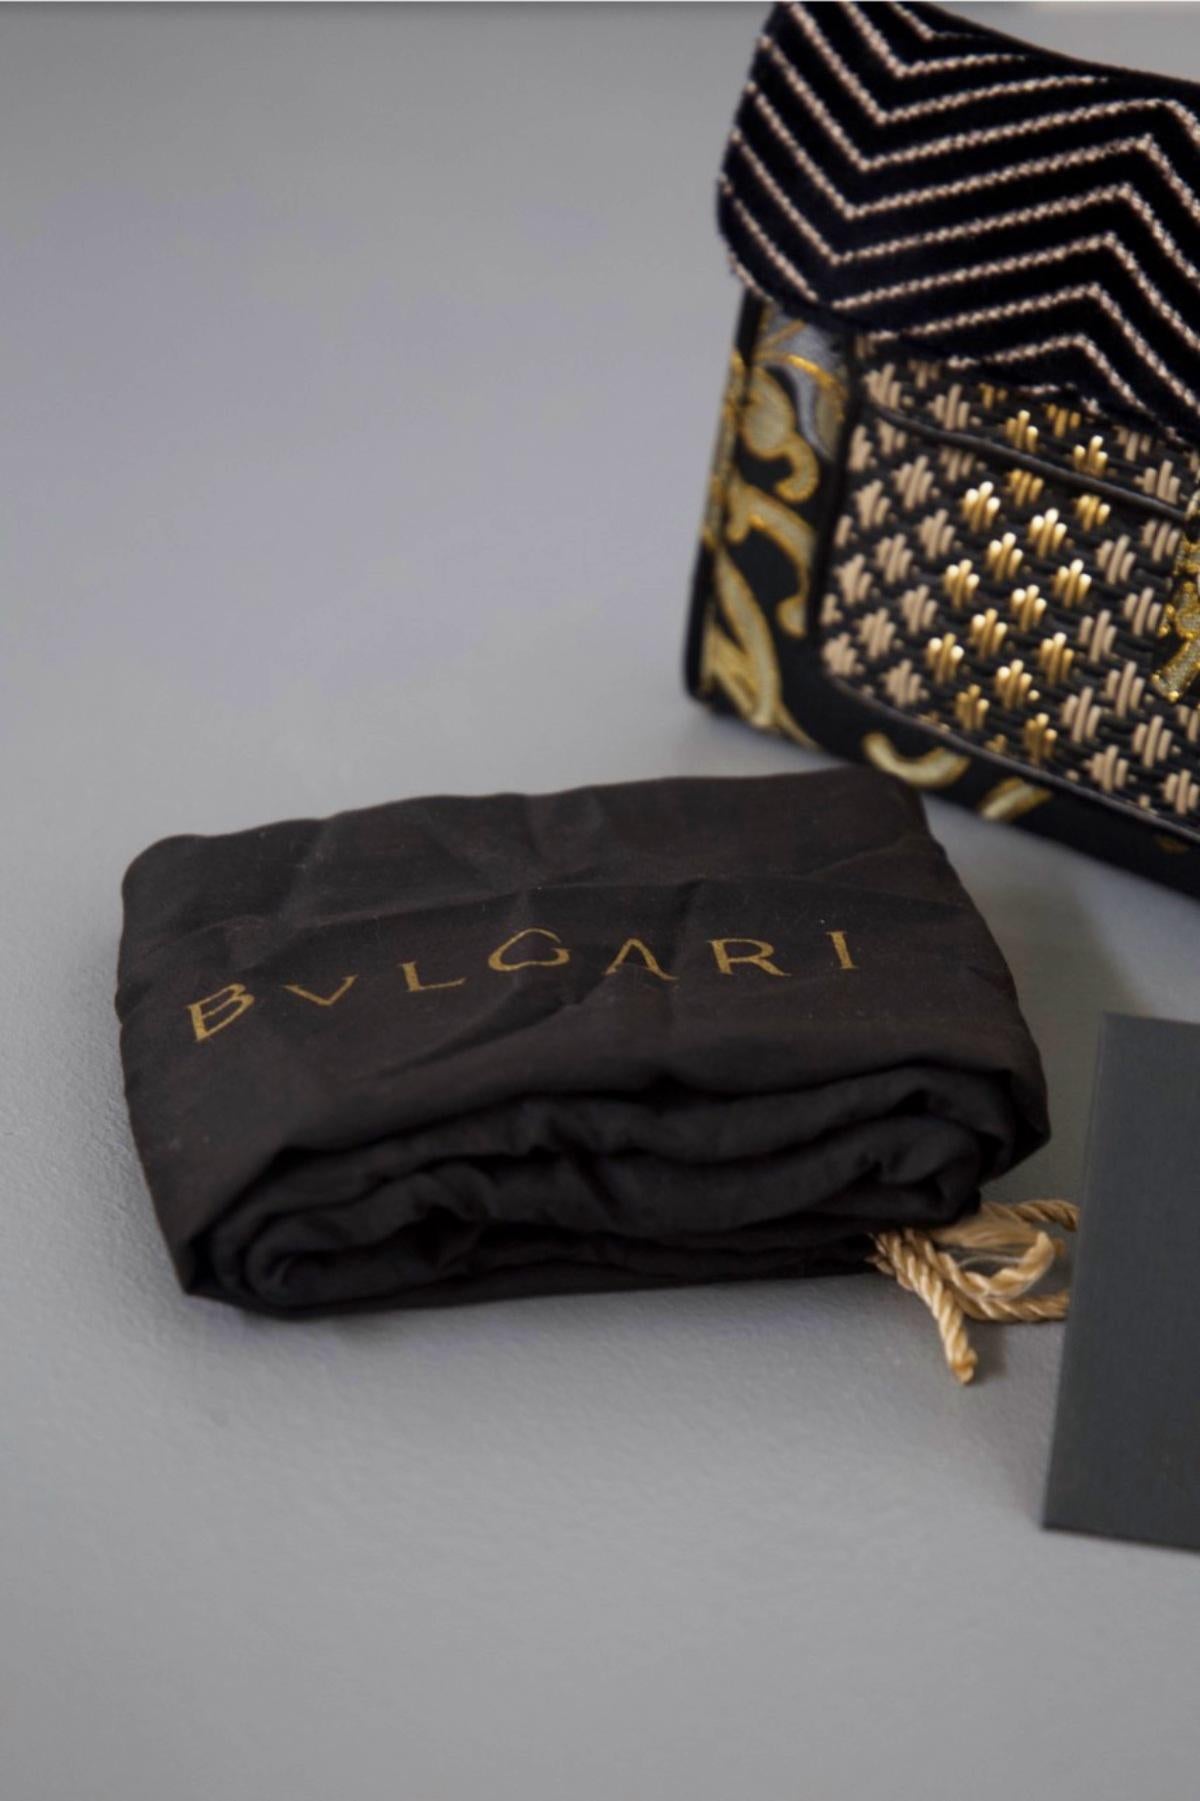 Bulgari Women's Clutch Bag with Golden Floral Details 5